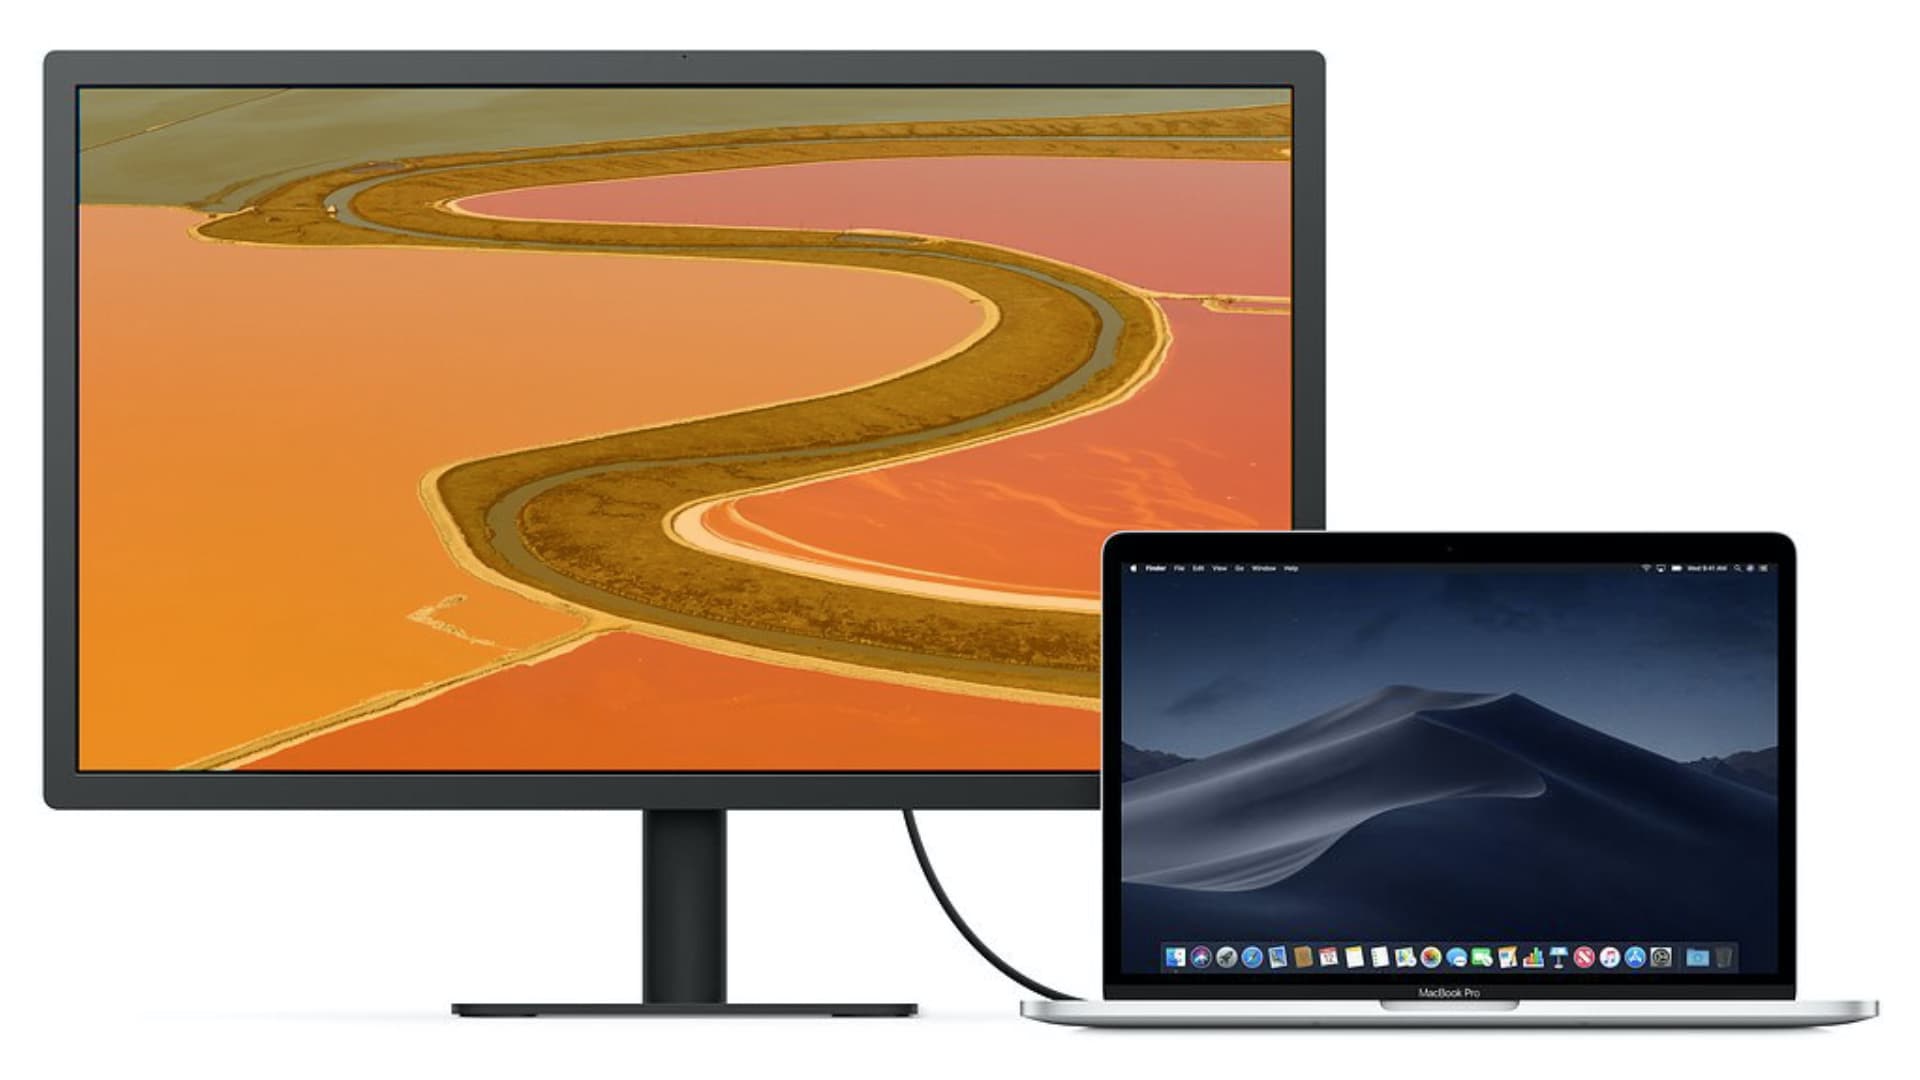 Cambie esta configuración de MacBook para solucionar problemas de color de pantalla externa [Pro tip]